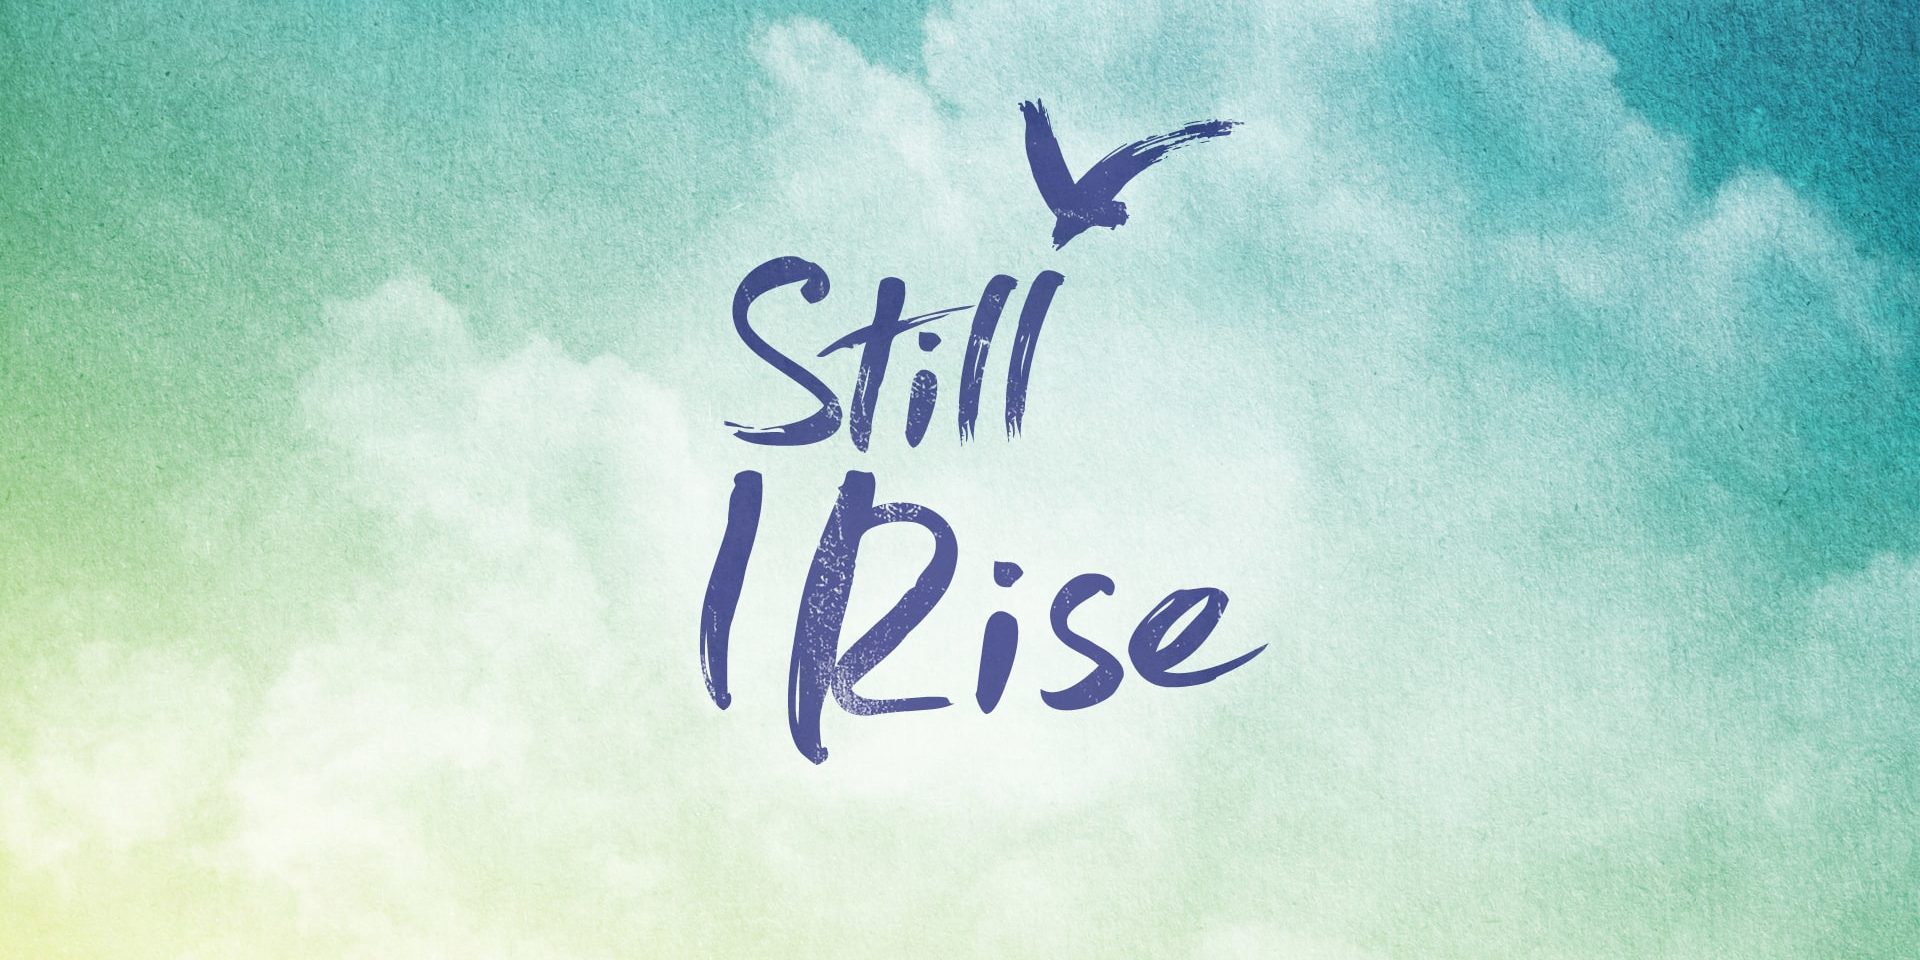 Sign-up for Still I Rise